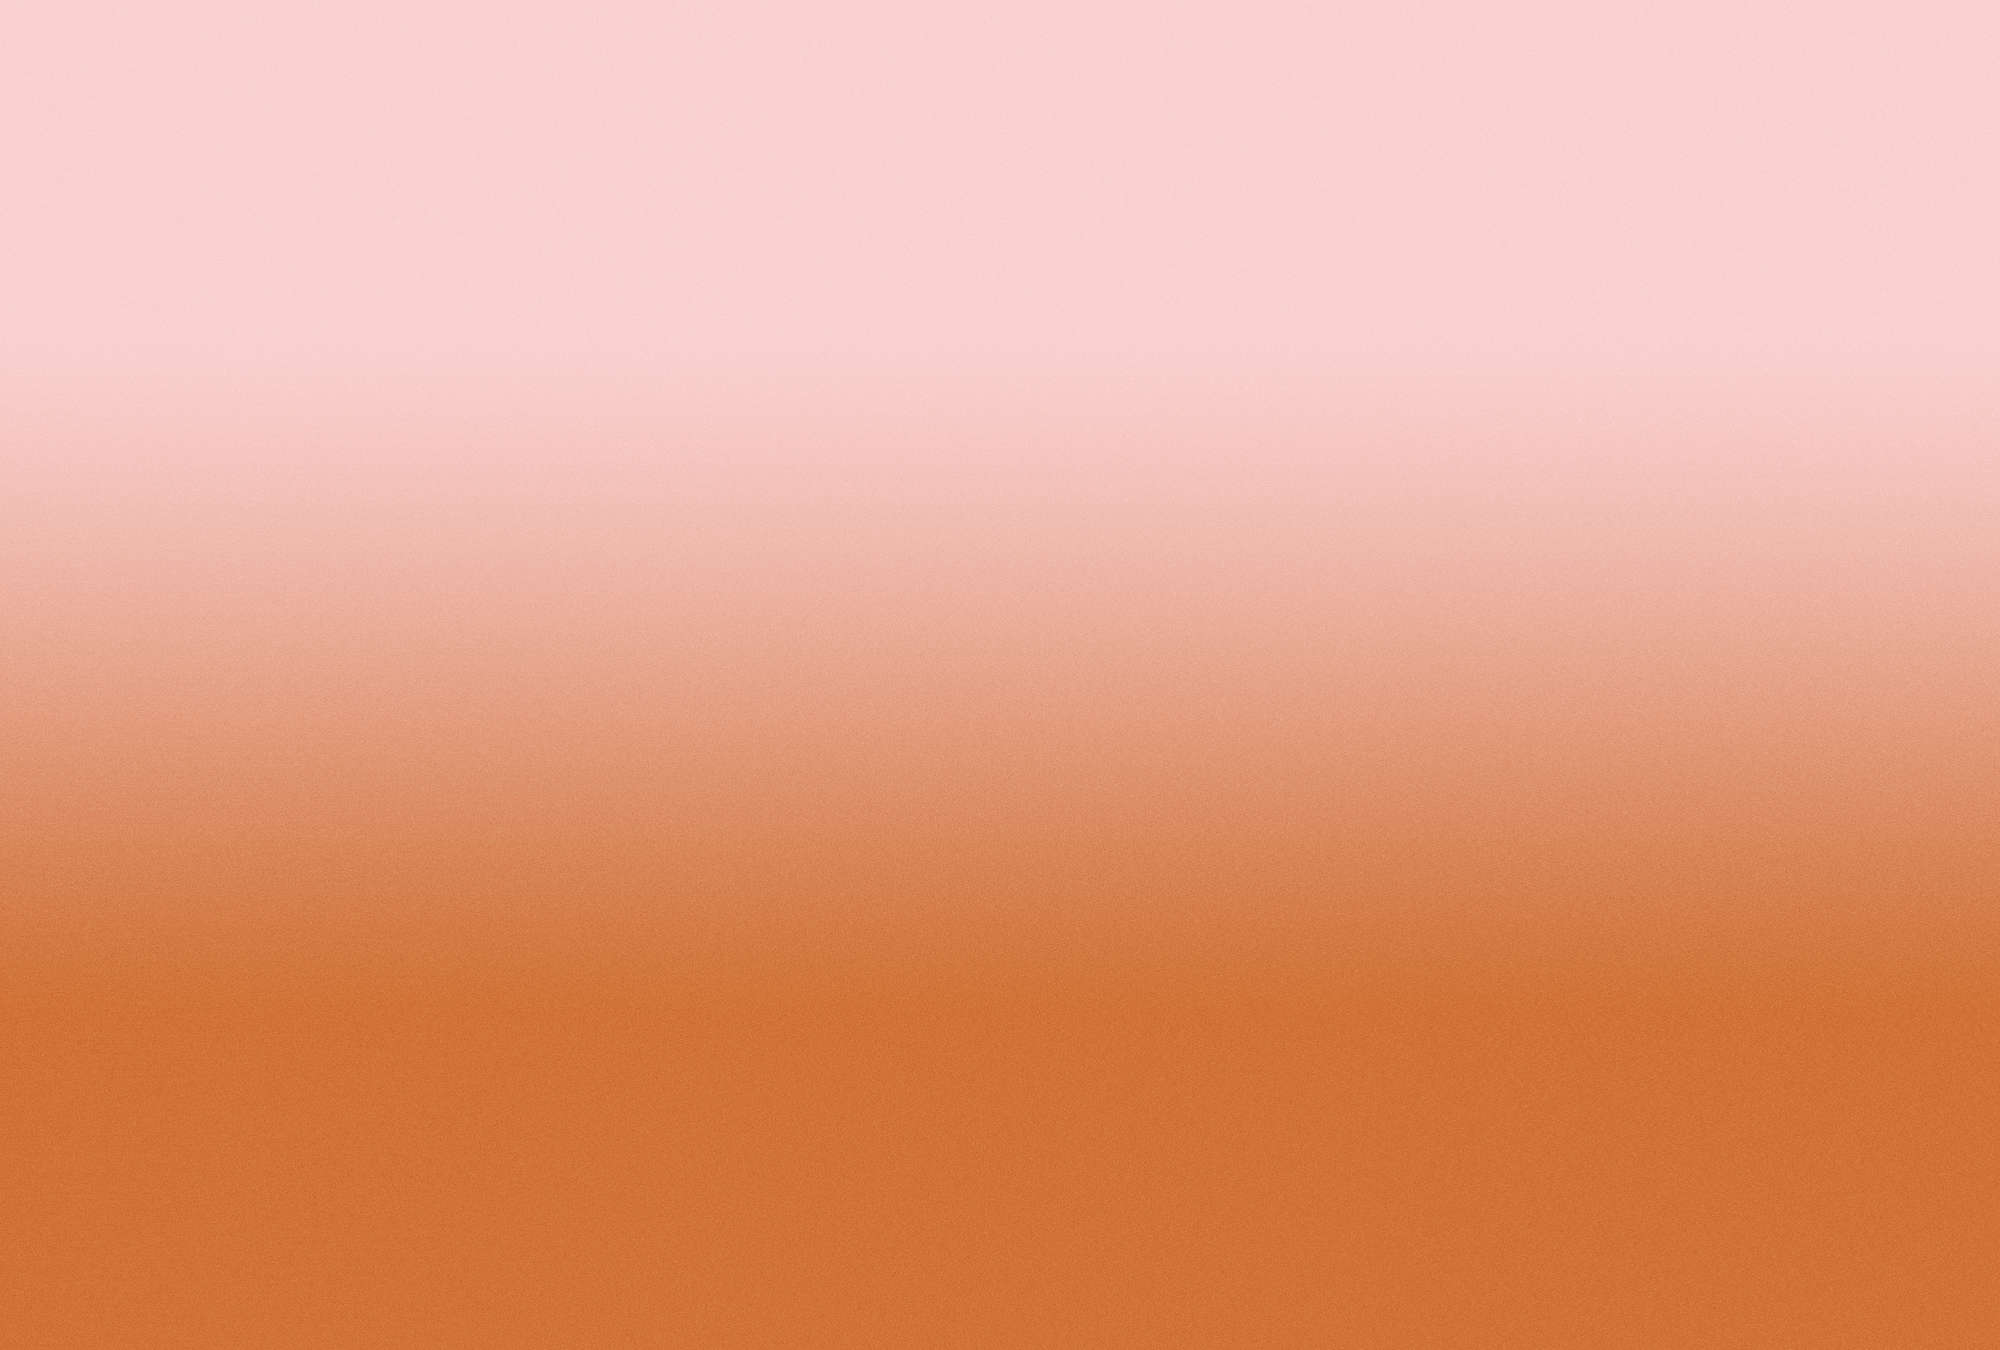             Colour Studio 4 - Ombre gradient pink & orange wallpaper
        